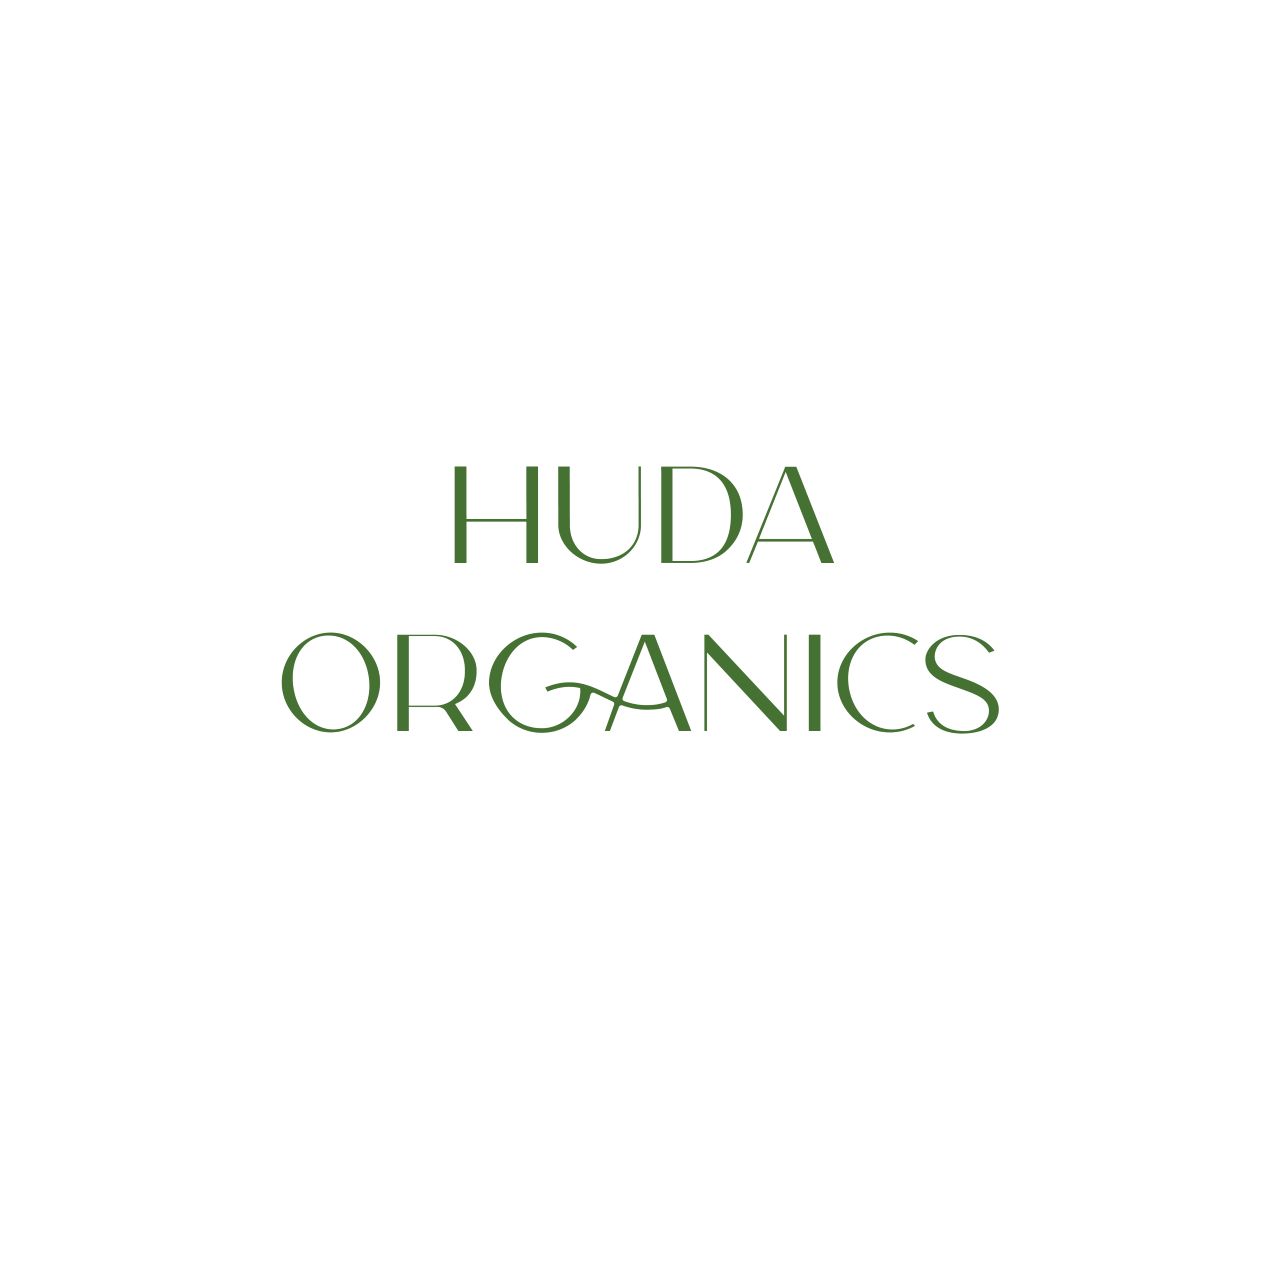 HUDA ORGANICS: OUR PLEDGE AS A COMPANY